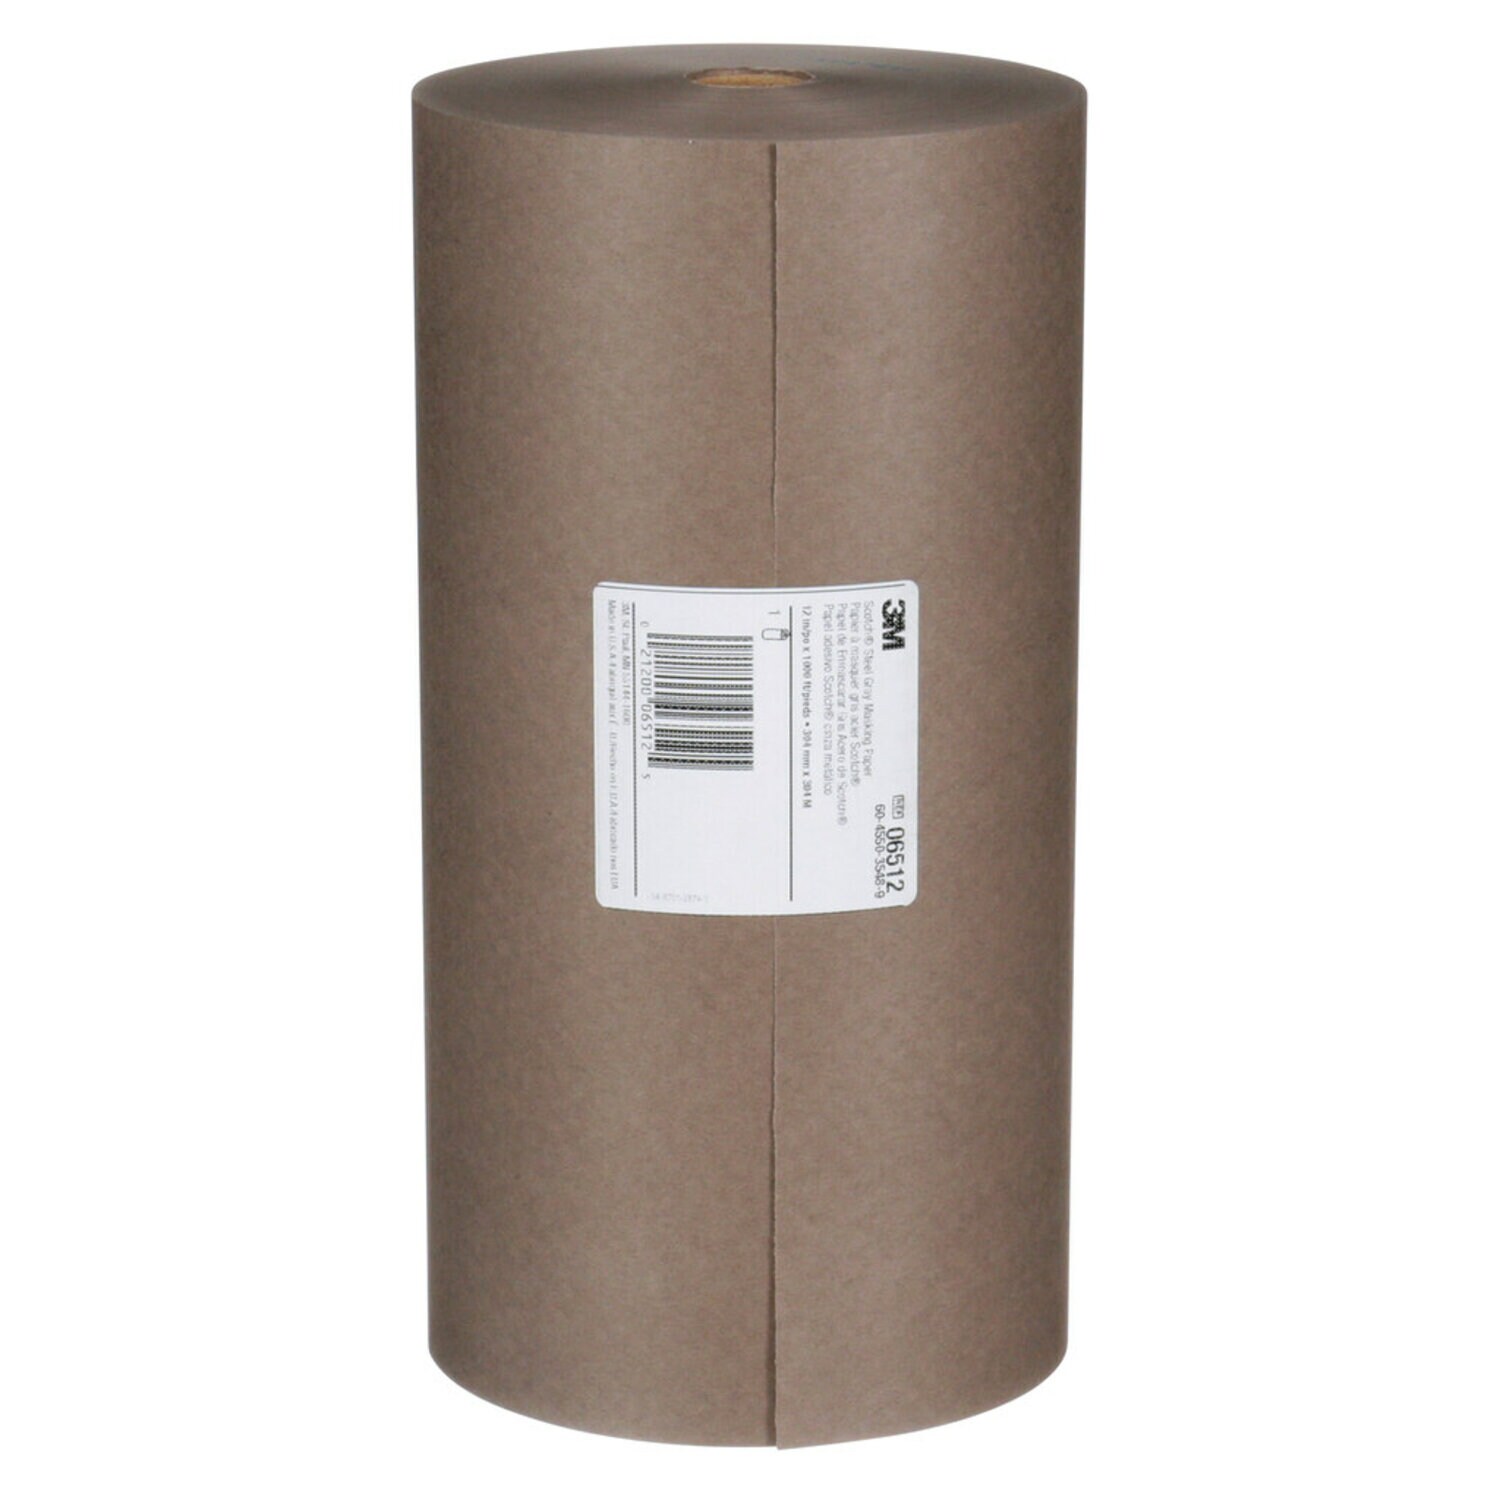 7010327747 - Scotch Steel Gray Masking Paper, 06512, 12 in x 1000 ft, 3 per case